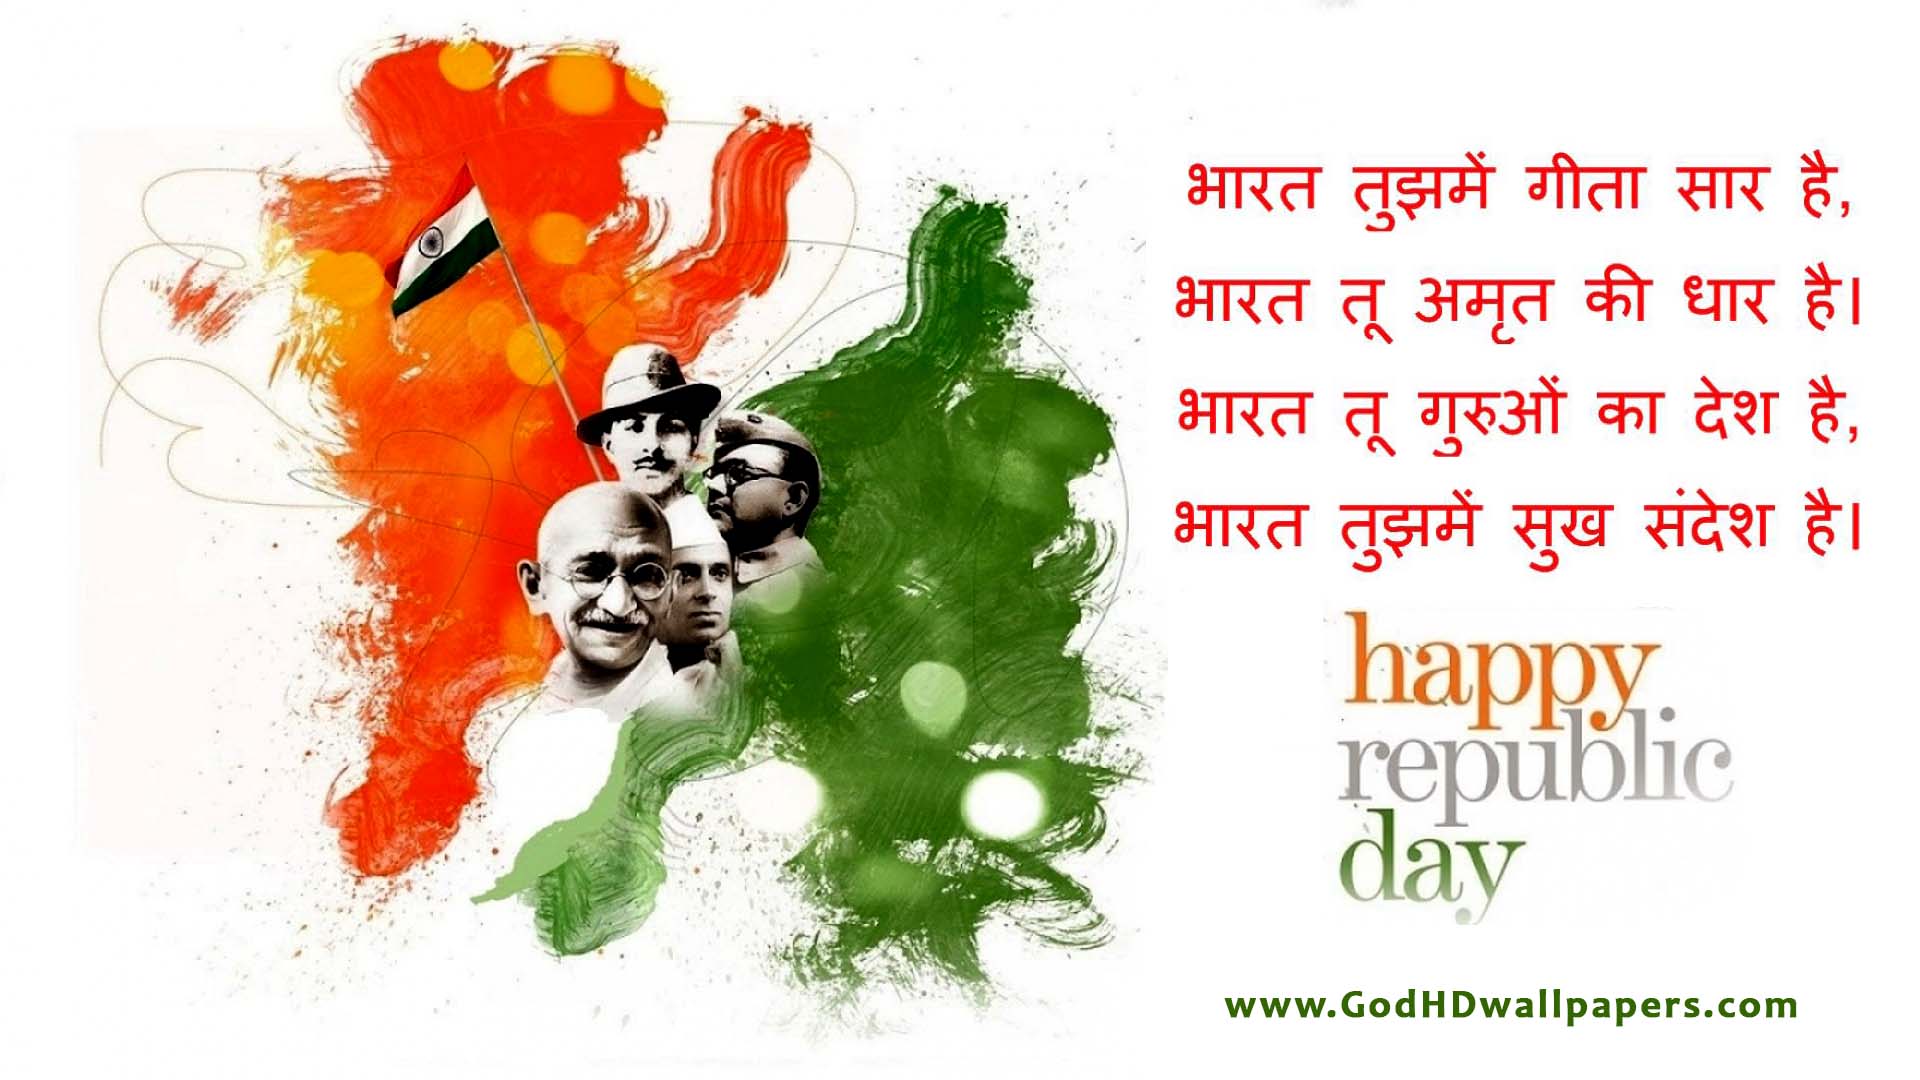 26 January Republic Day Netaji Subash Chandra Bose - Republic Day 2020 India - HD Wallpaper 